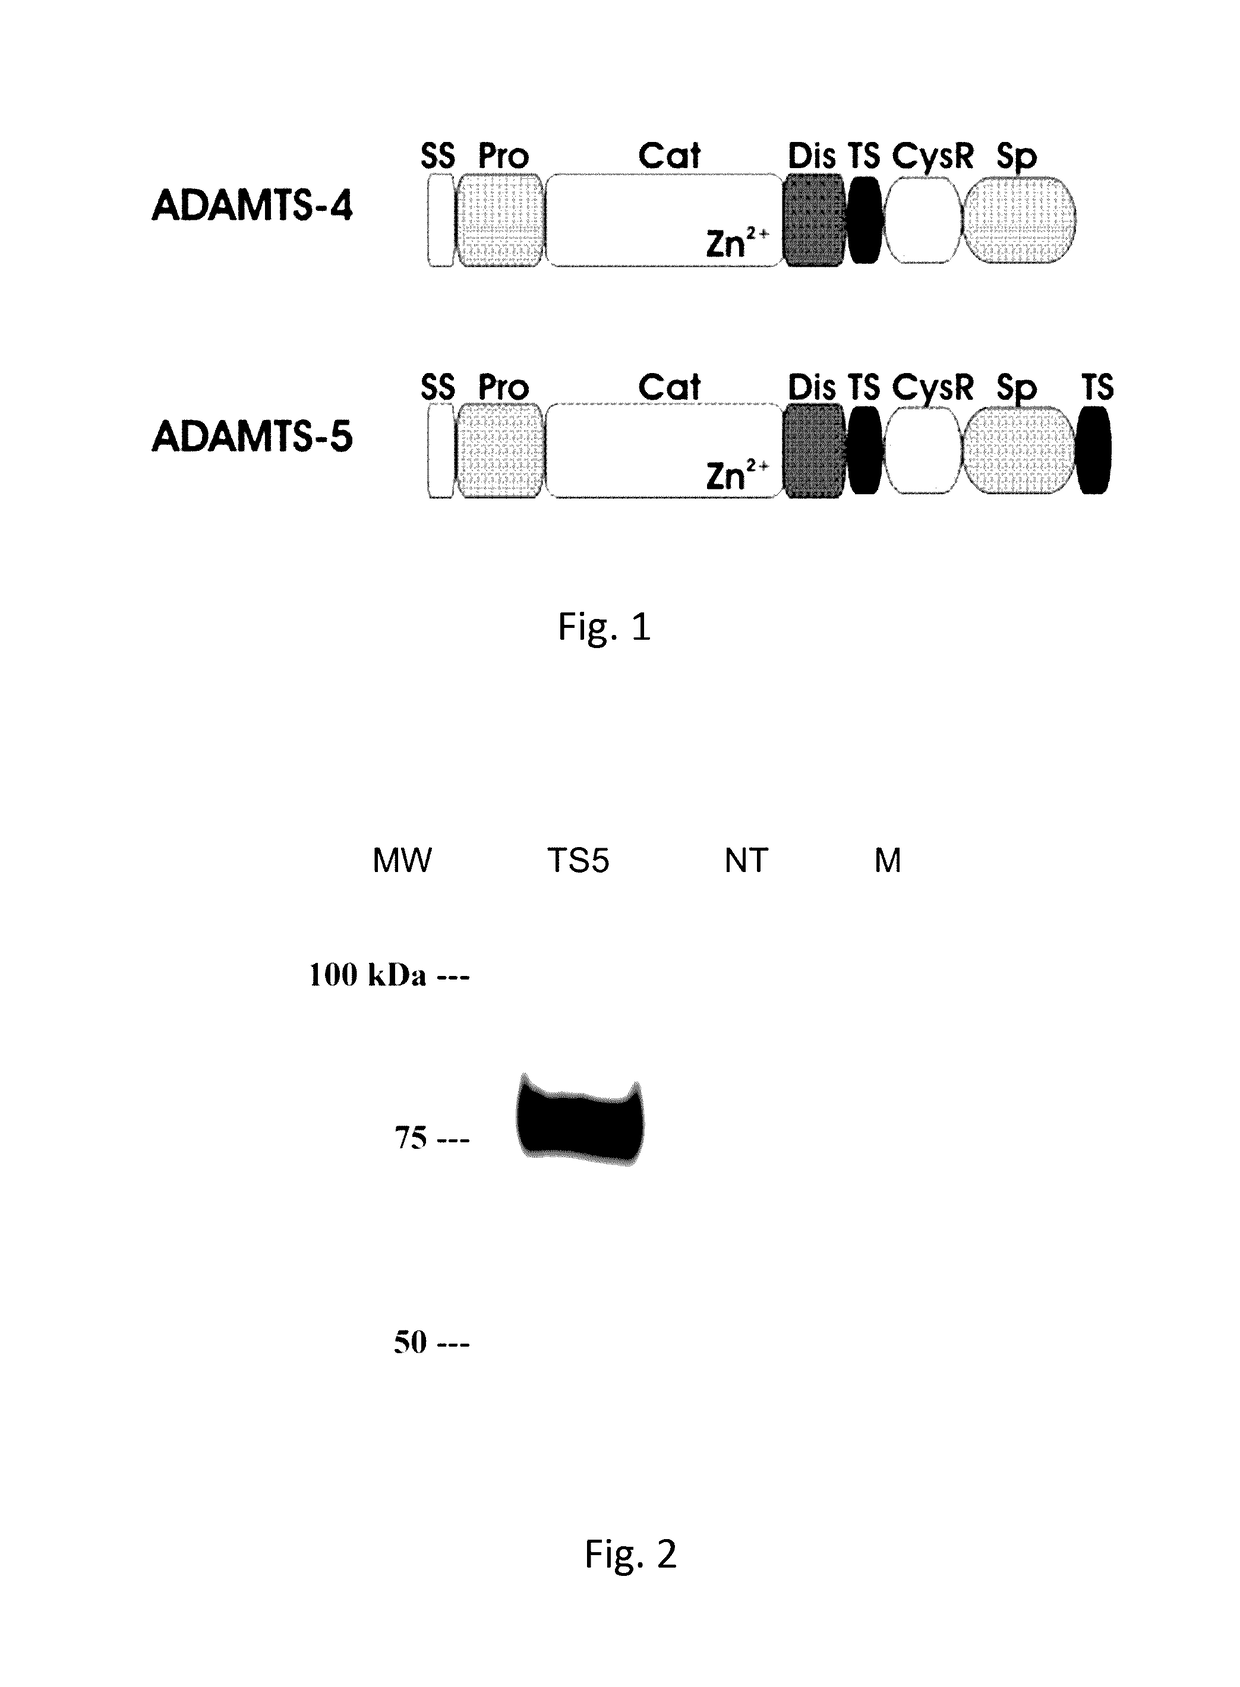 Anti-ADAMTS-5 antibody, derivatives and uses thereof